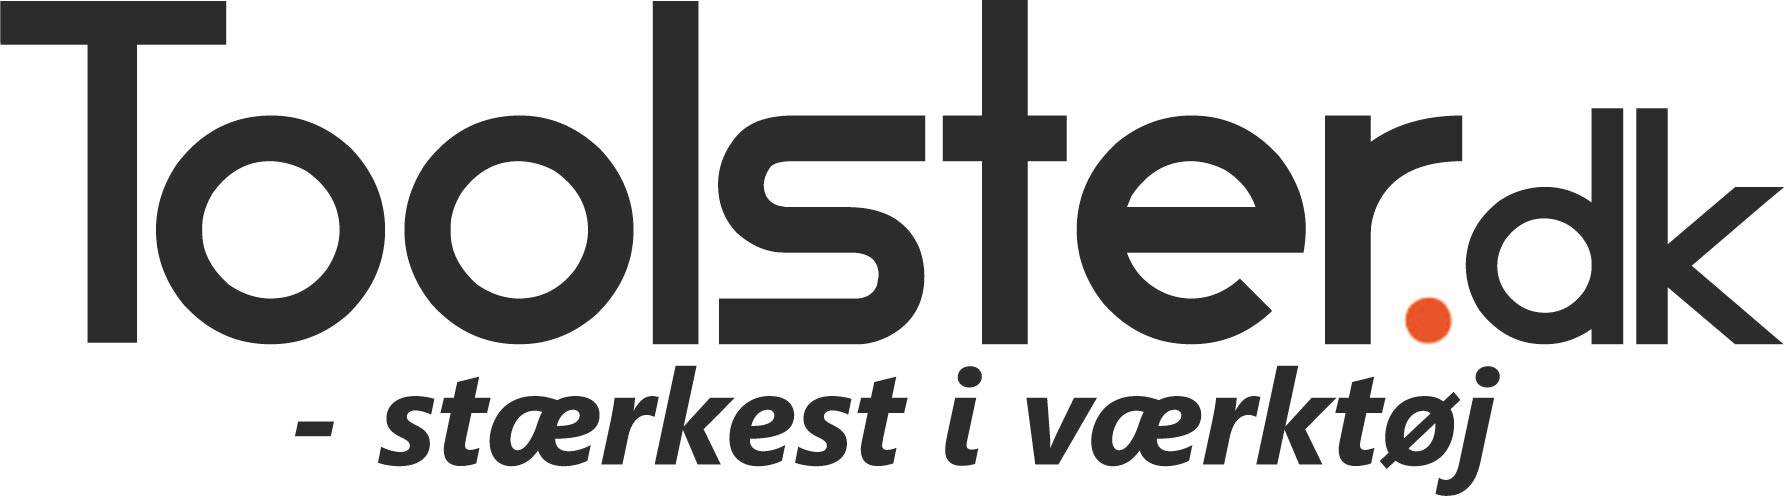 Toolster logo